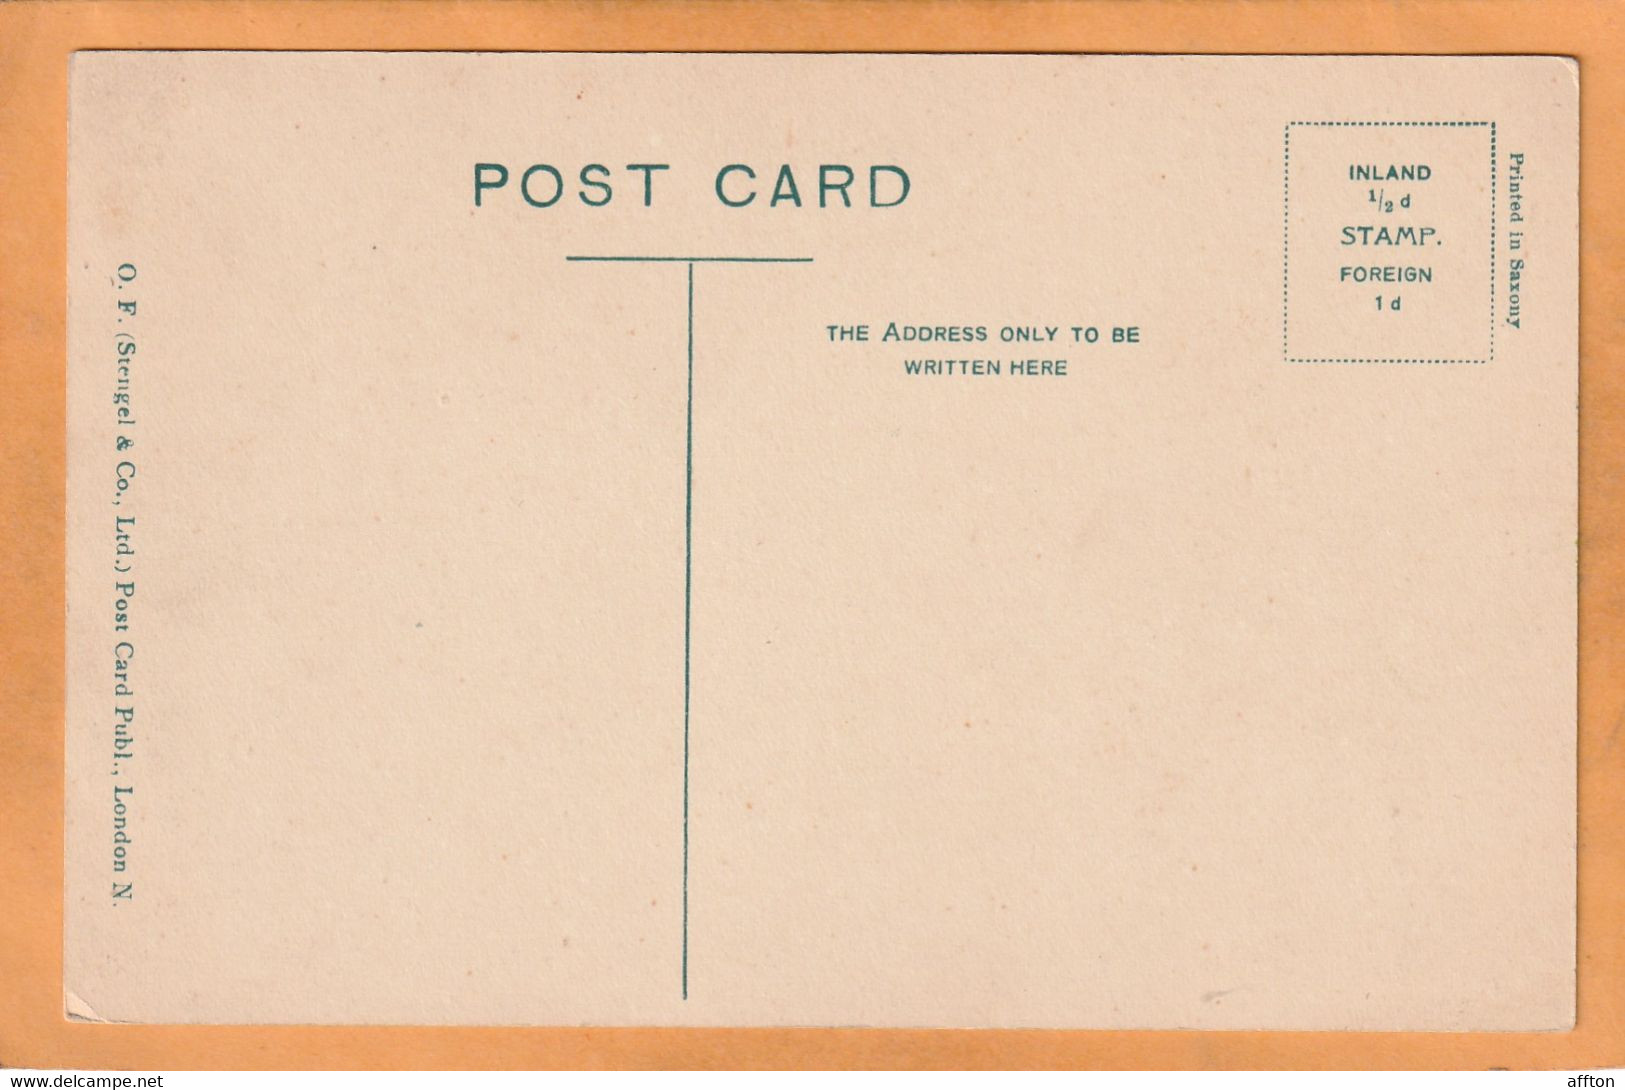 Clovelly UK 1905 Postcard - Clovelly